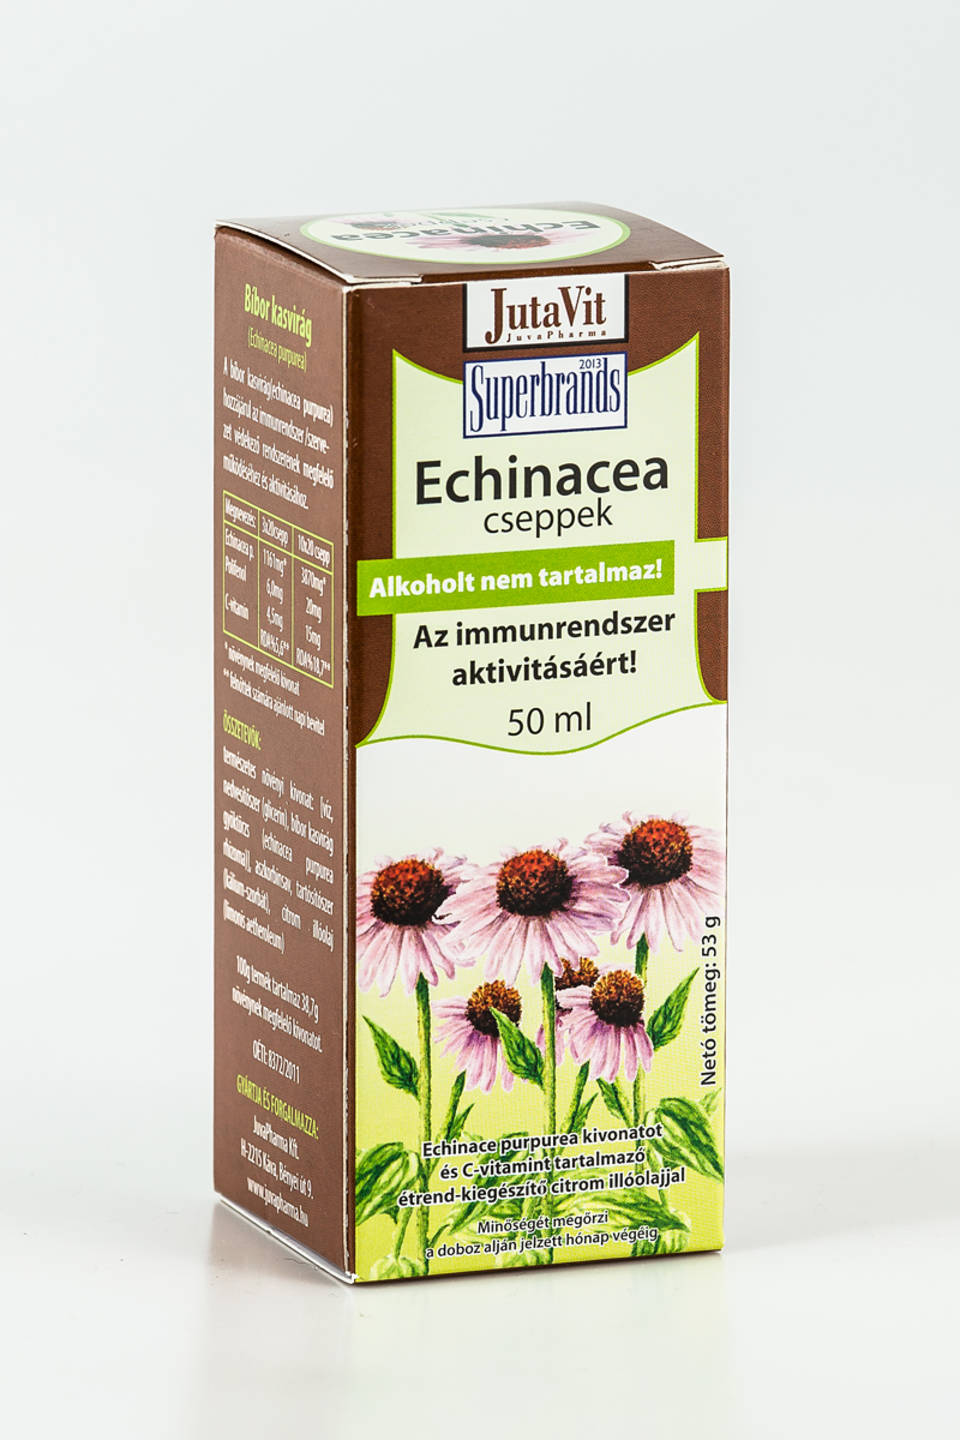 echinacea hipertónia esetén magas vérnyomás milyen nyomáson